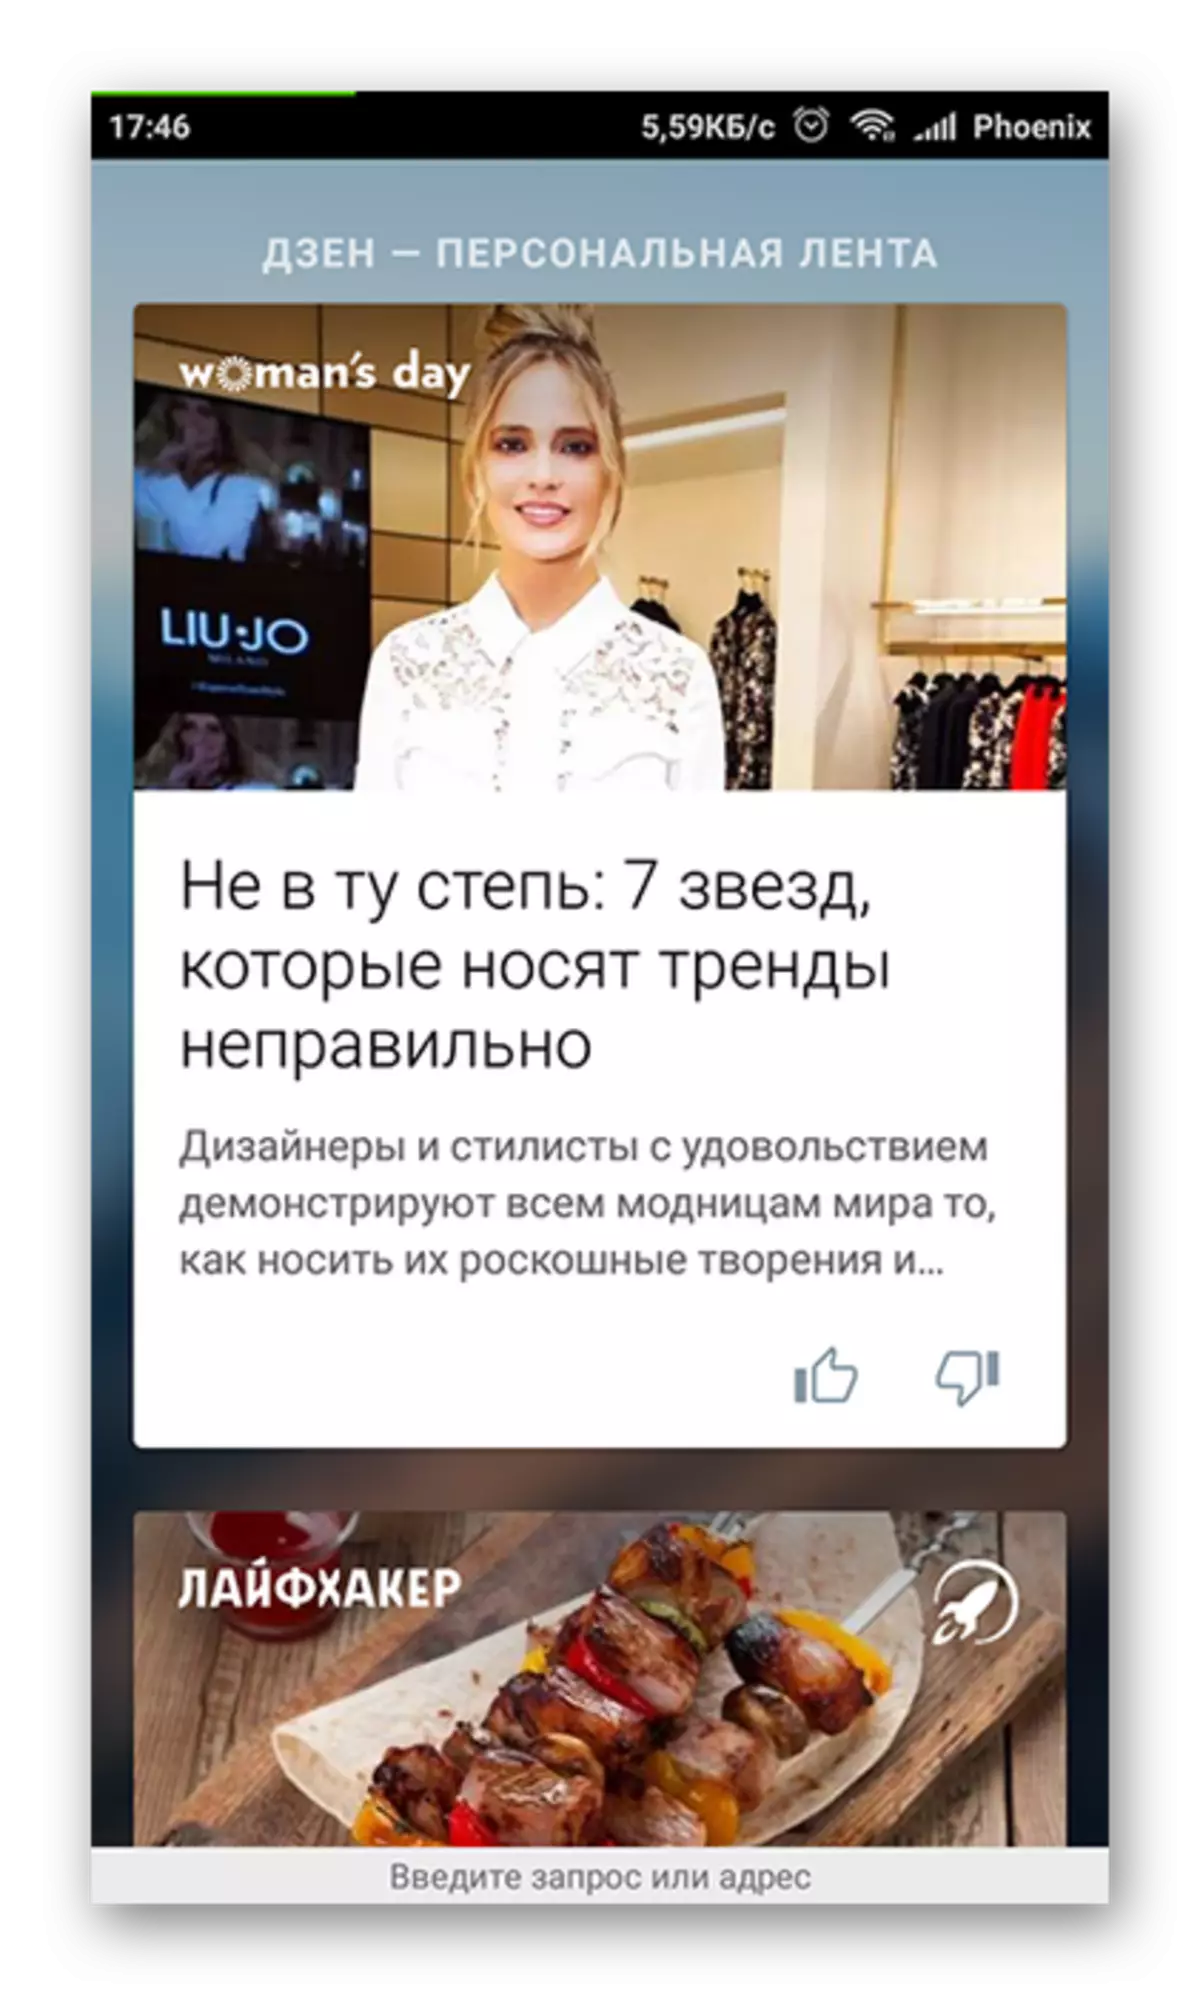 Yandex.dzen kwi-Android